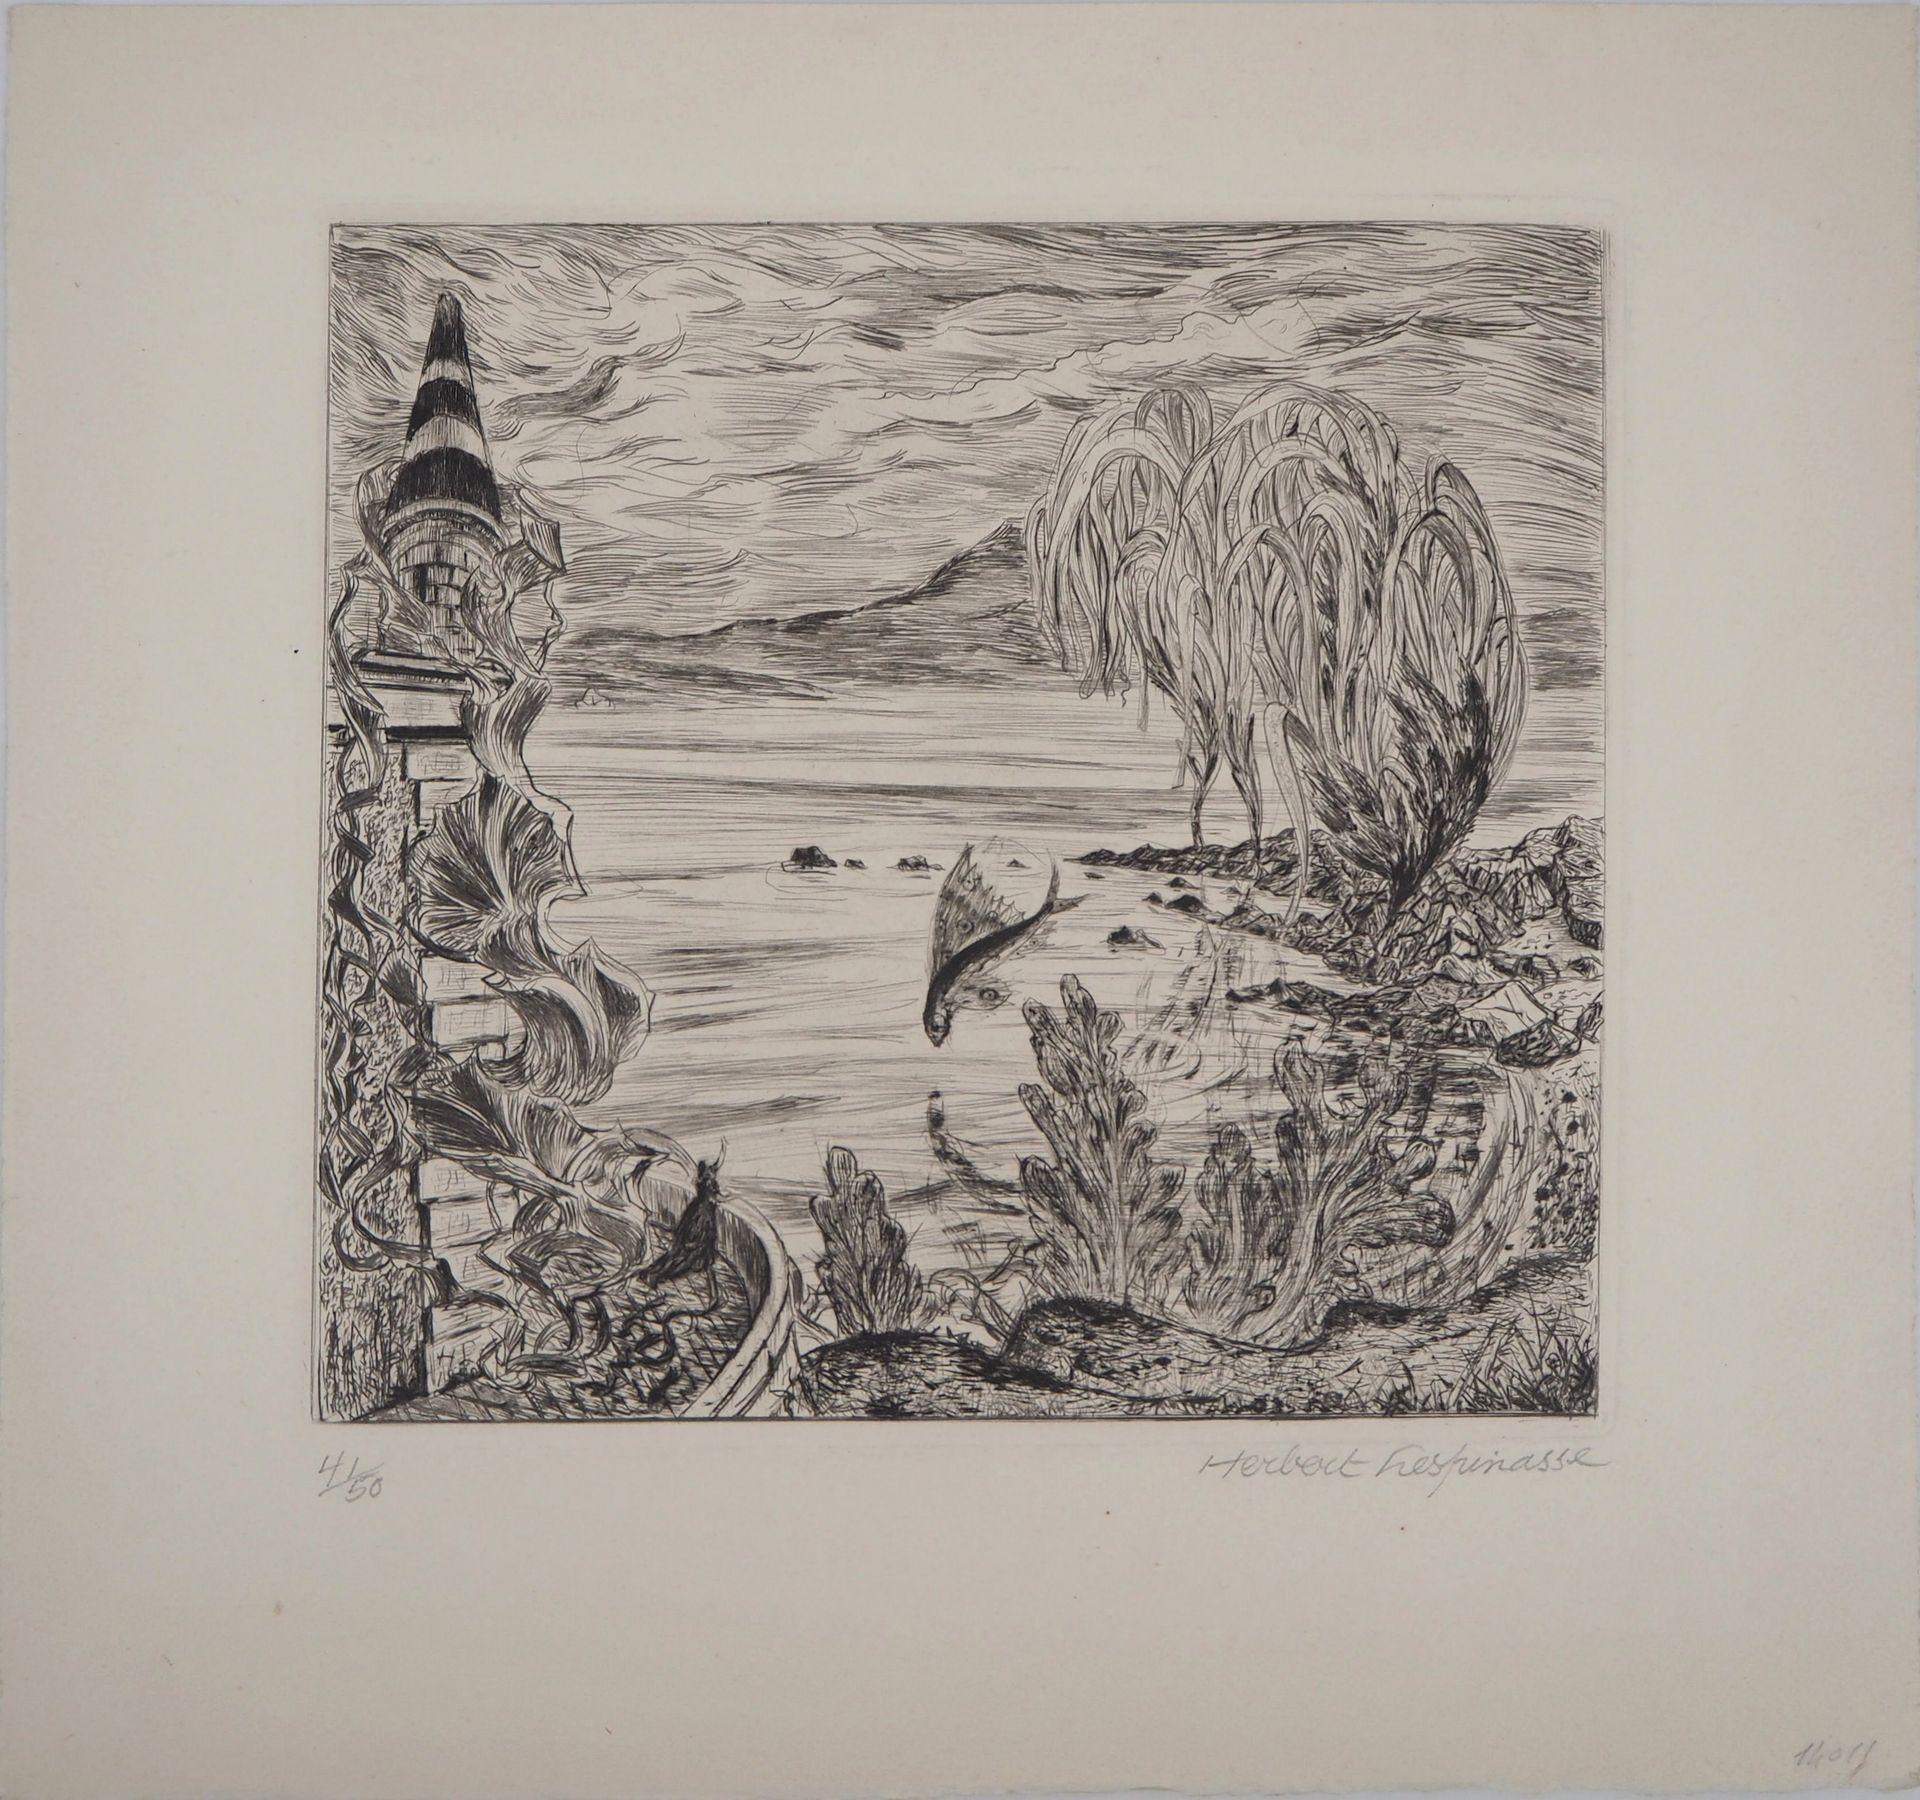 Herbert LESPINASSE 赫伯特-莱斯皮纳什(1884-1972)

讲故事的景观

原始蚀刻画

用铅笔签名

牛皮纸上 32.5 x 34.5
&hellip;